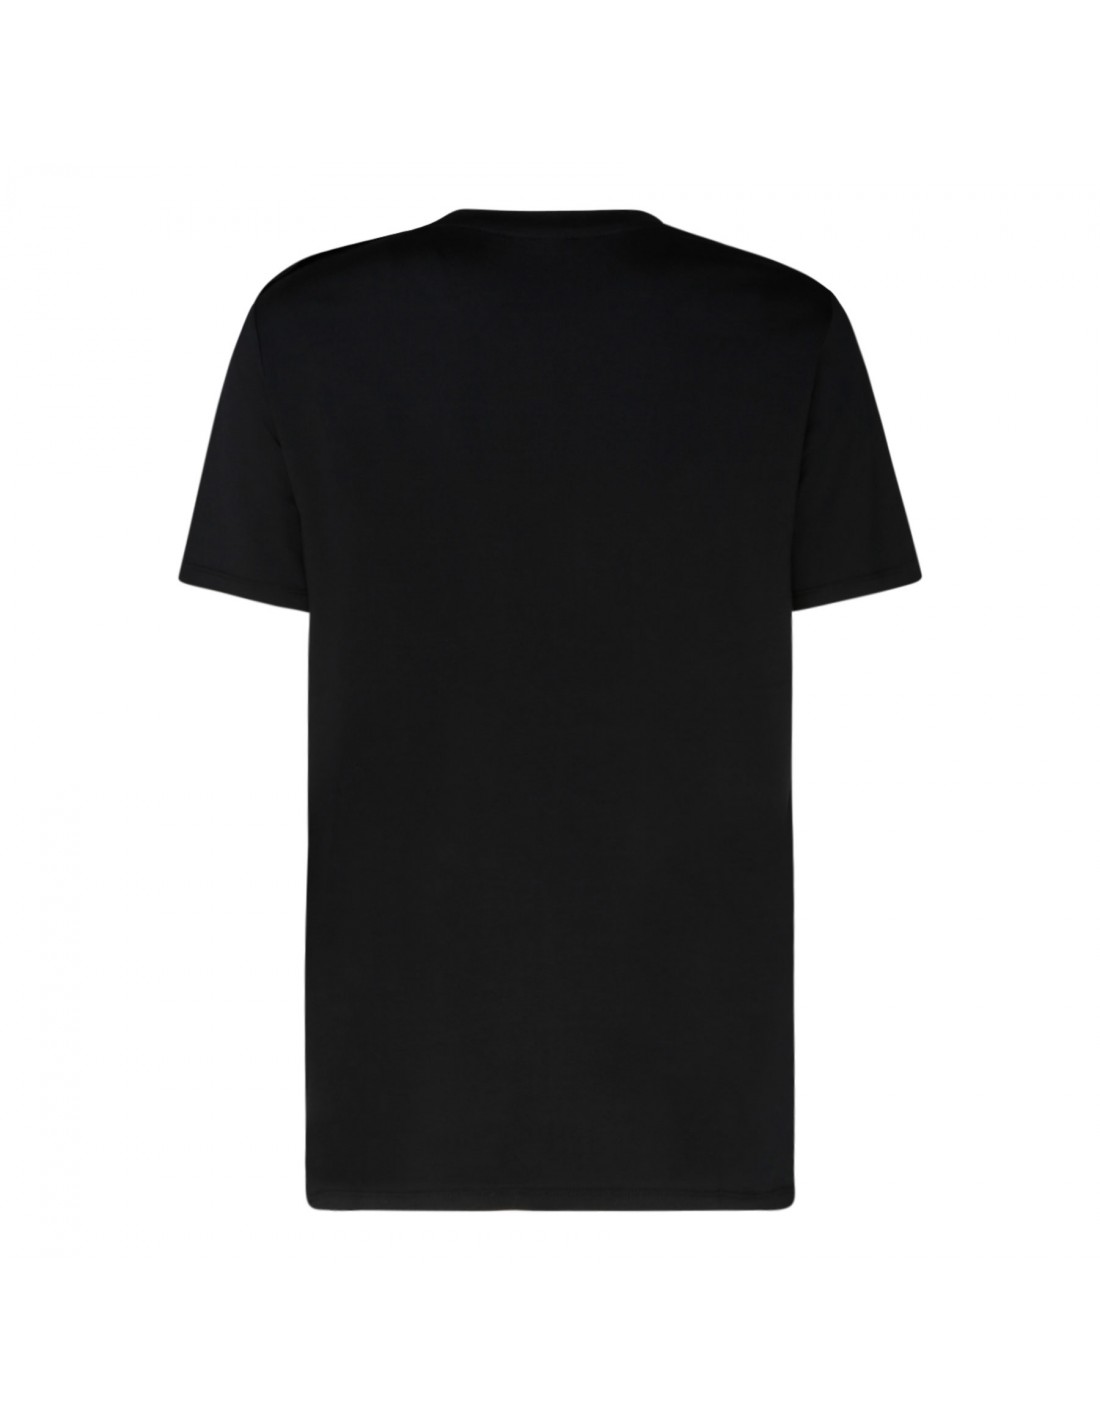 Buttoned black T-shirt